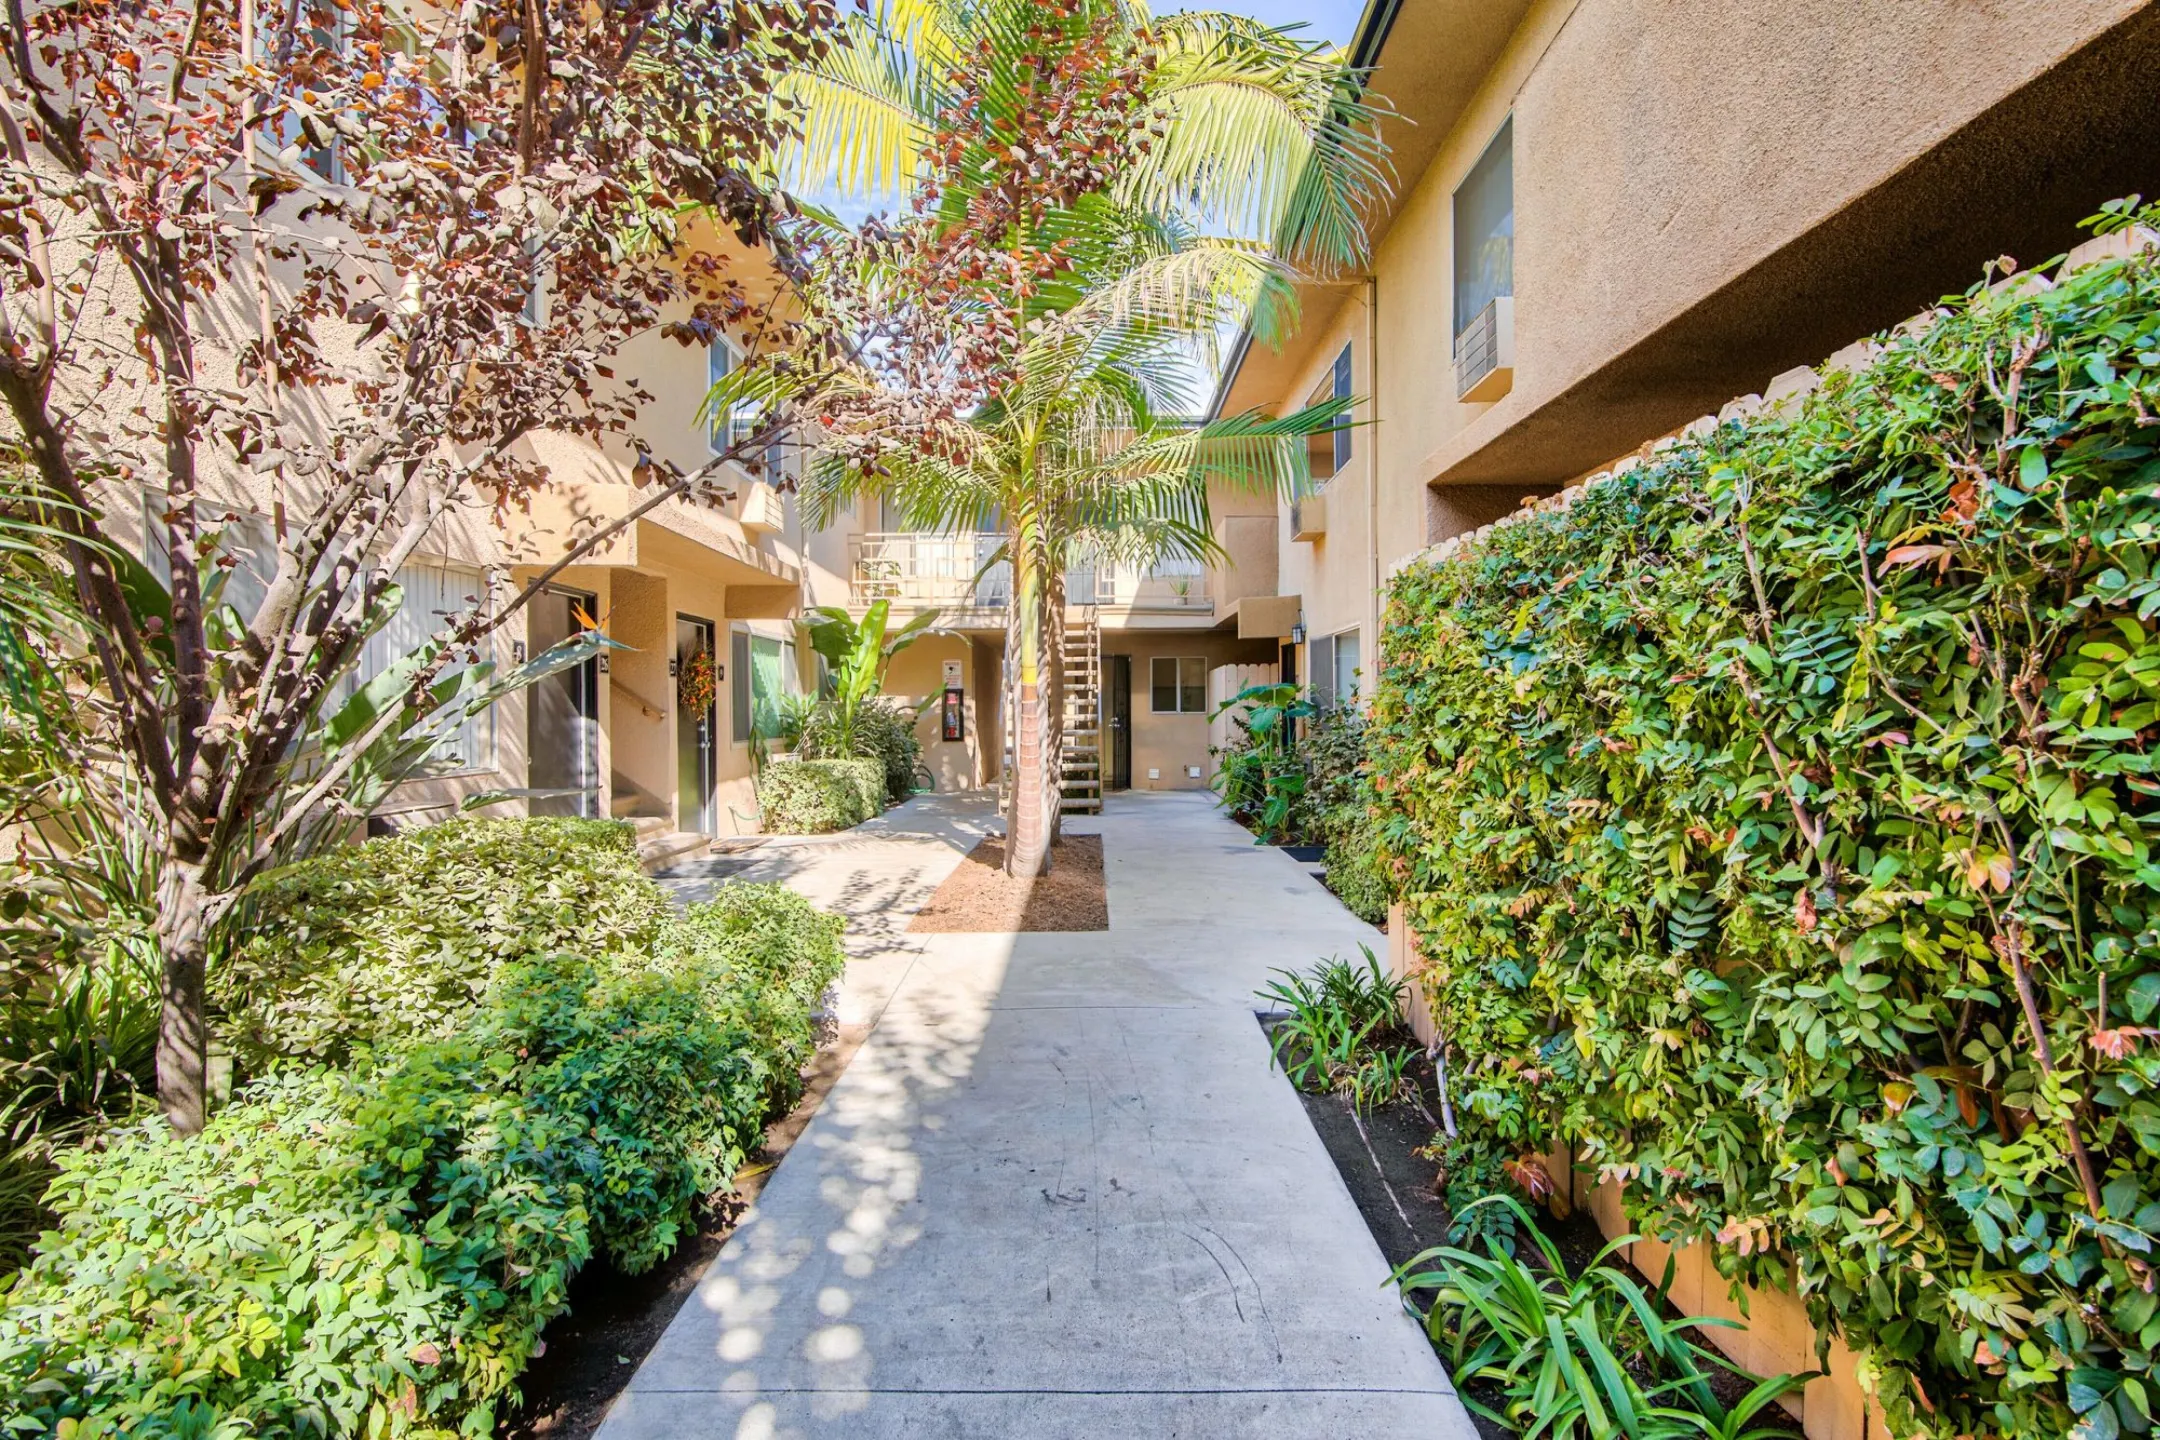 Building - Ramona Palm Apartment Homes - Bellflower, CA